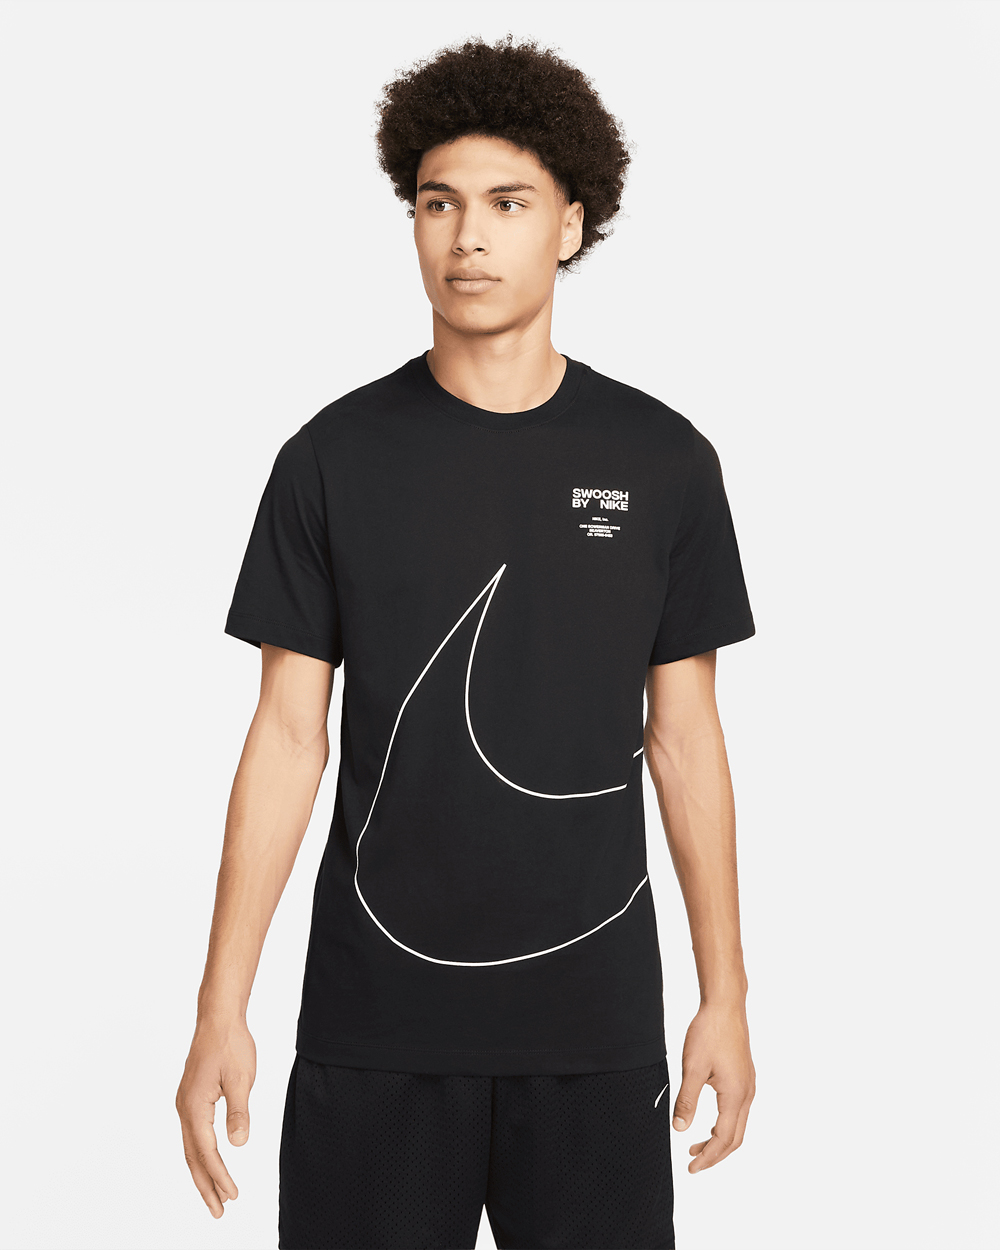 Nike-Sportswear-Swoosh-T-Shirt-Black-White